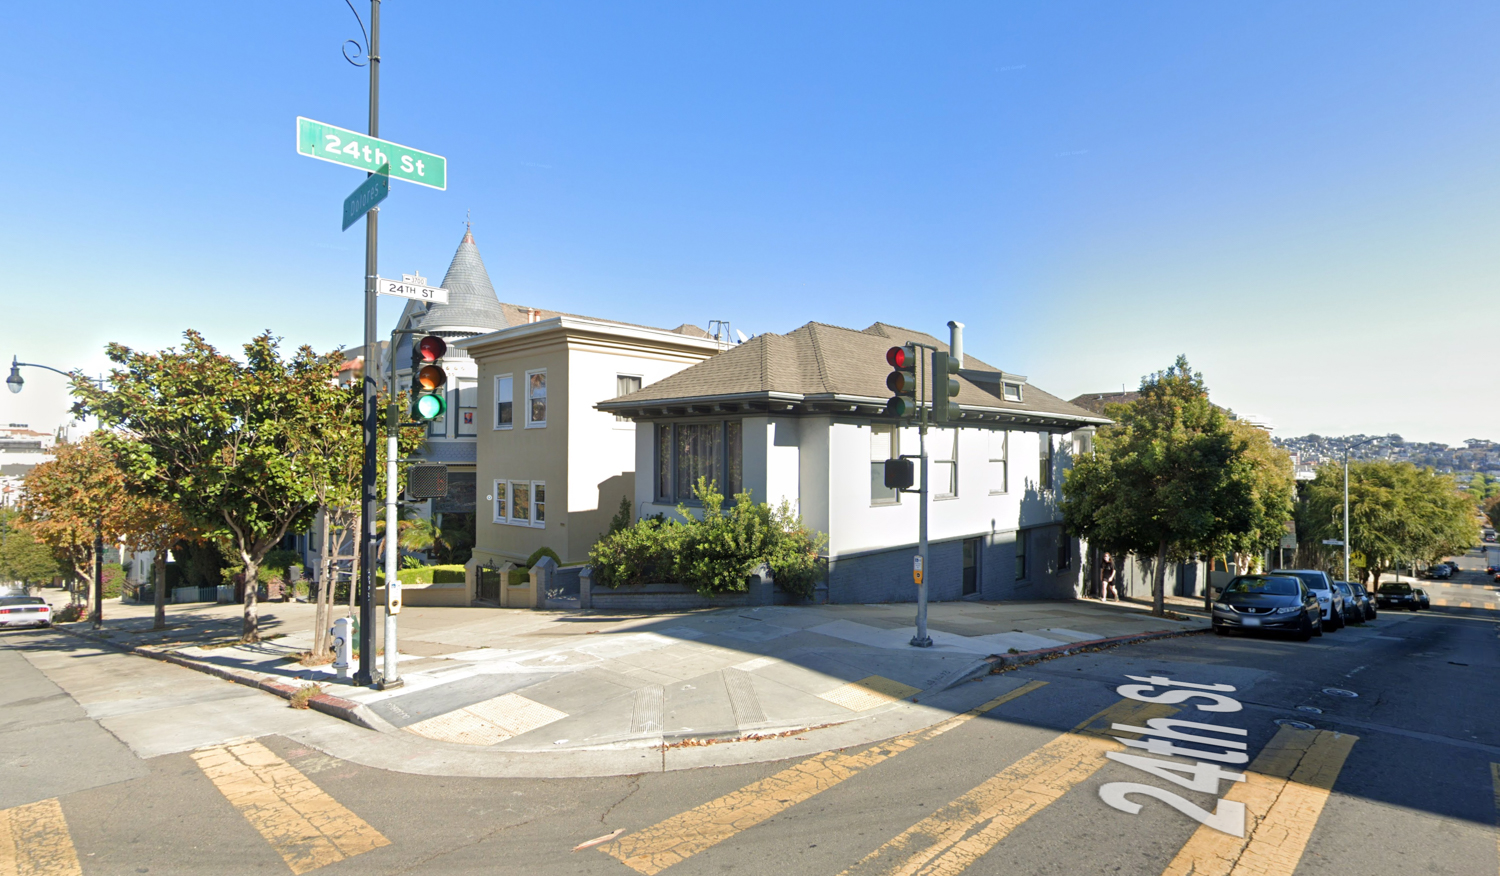 1099 Dolores Street, image via Google Street View